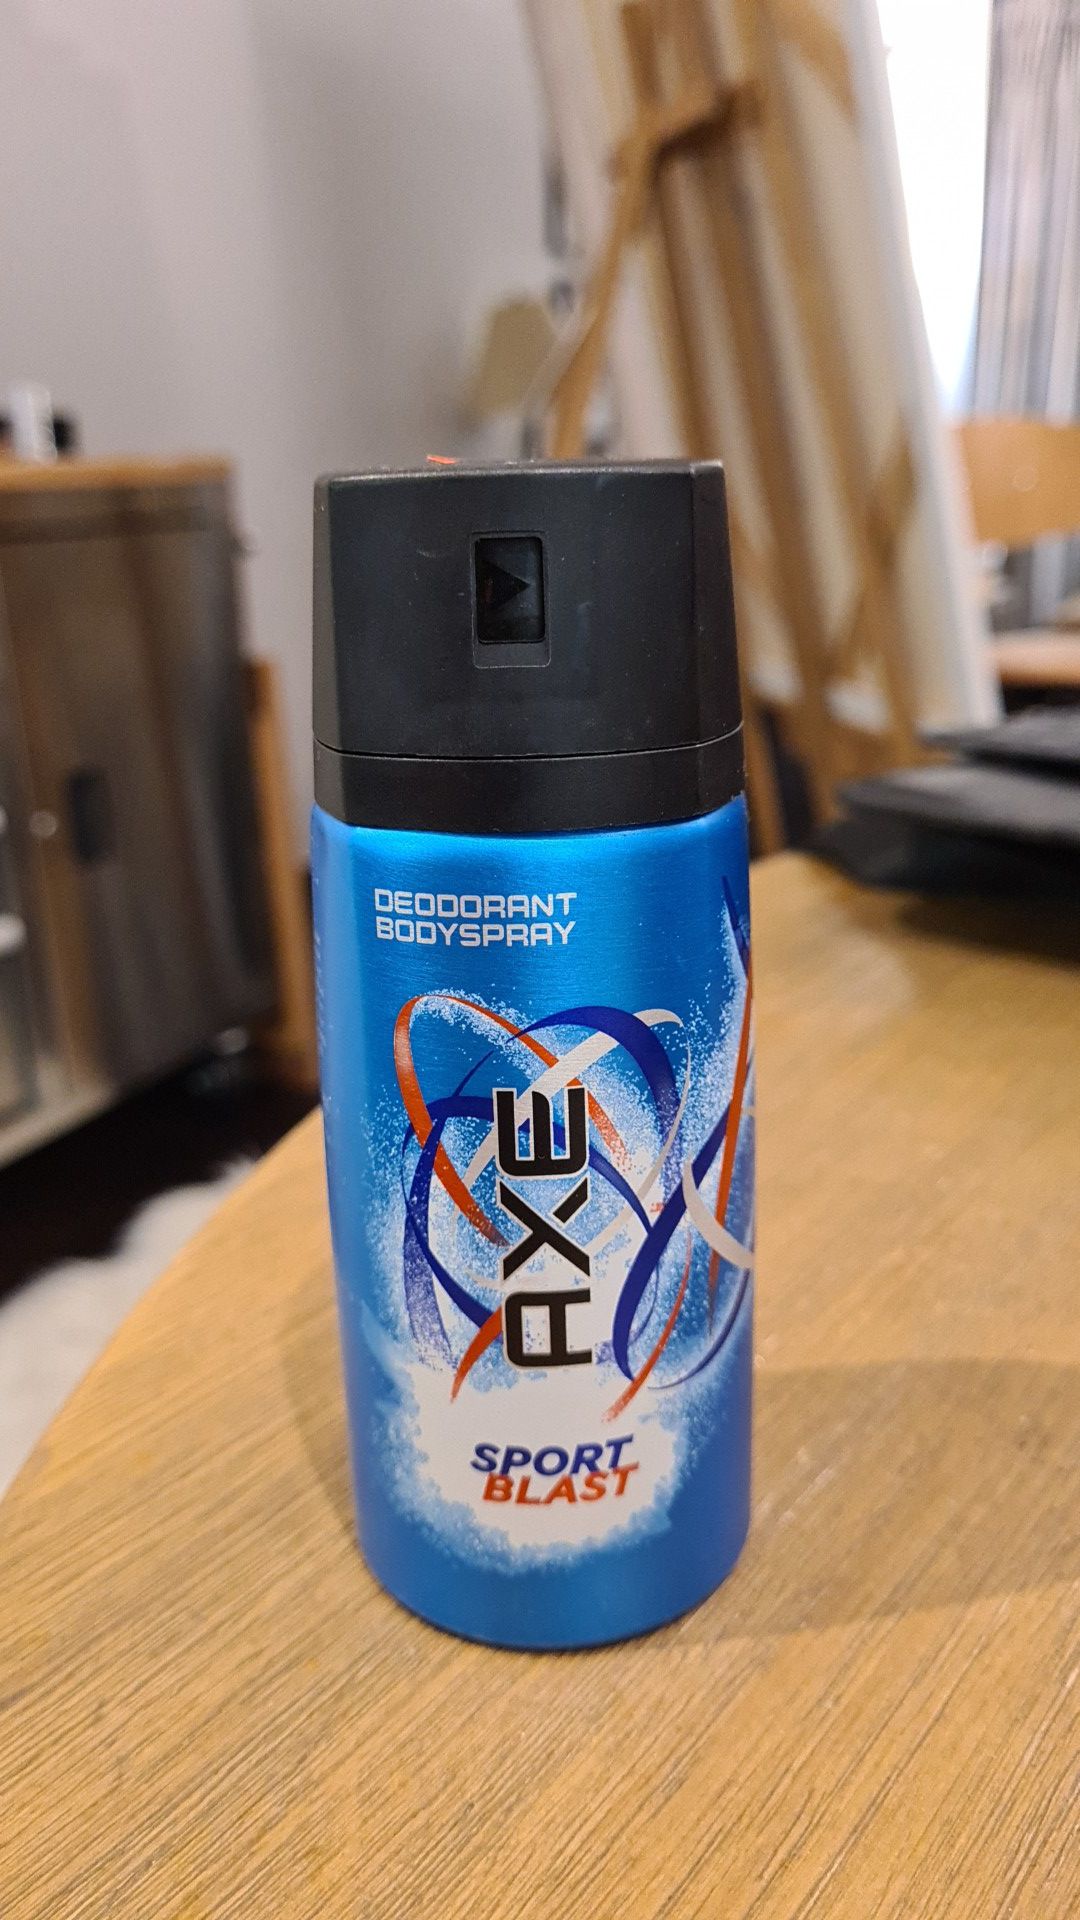 Axe bodyspray deodorant